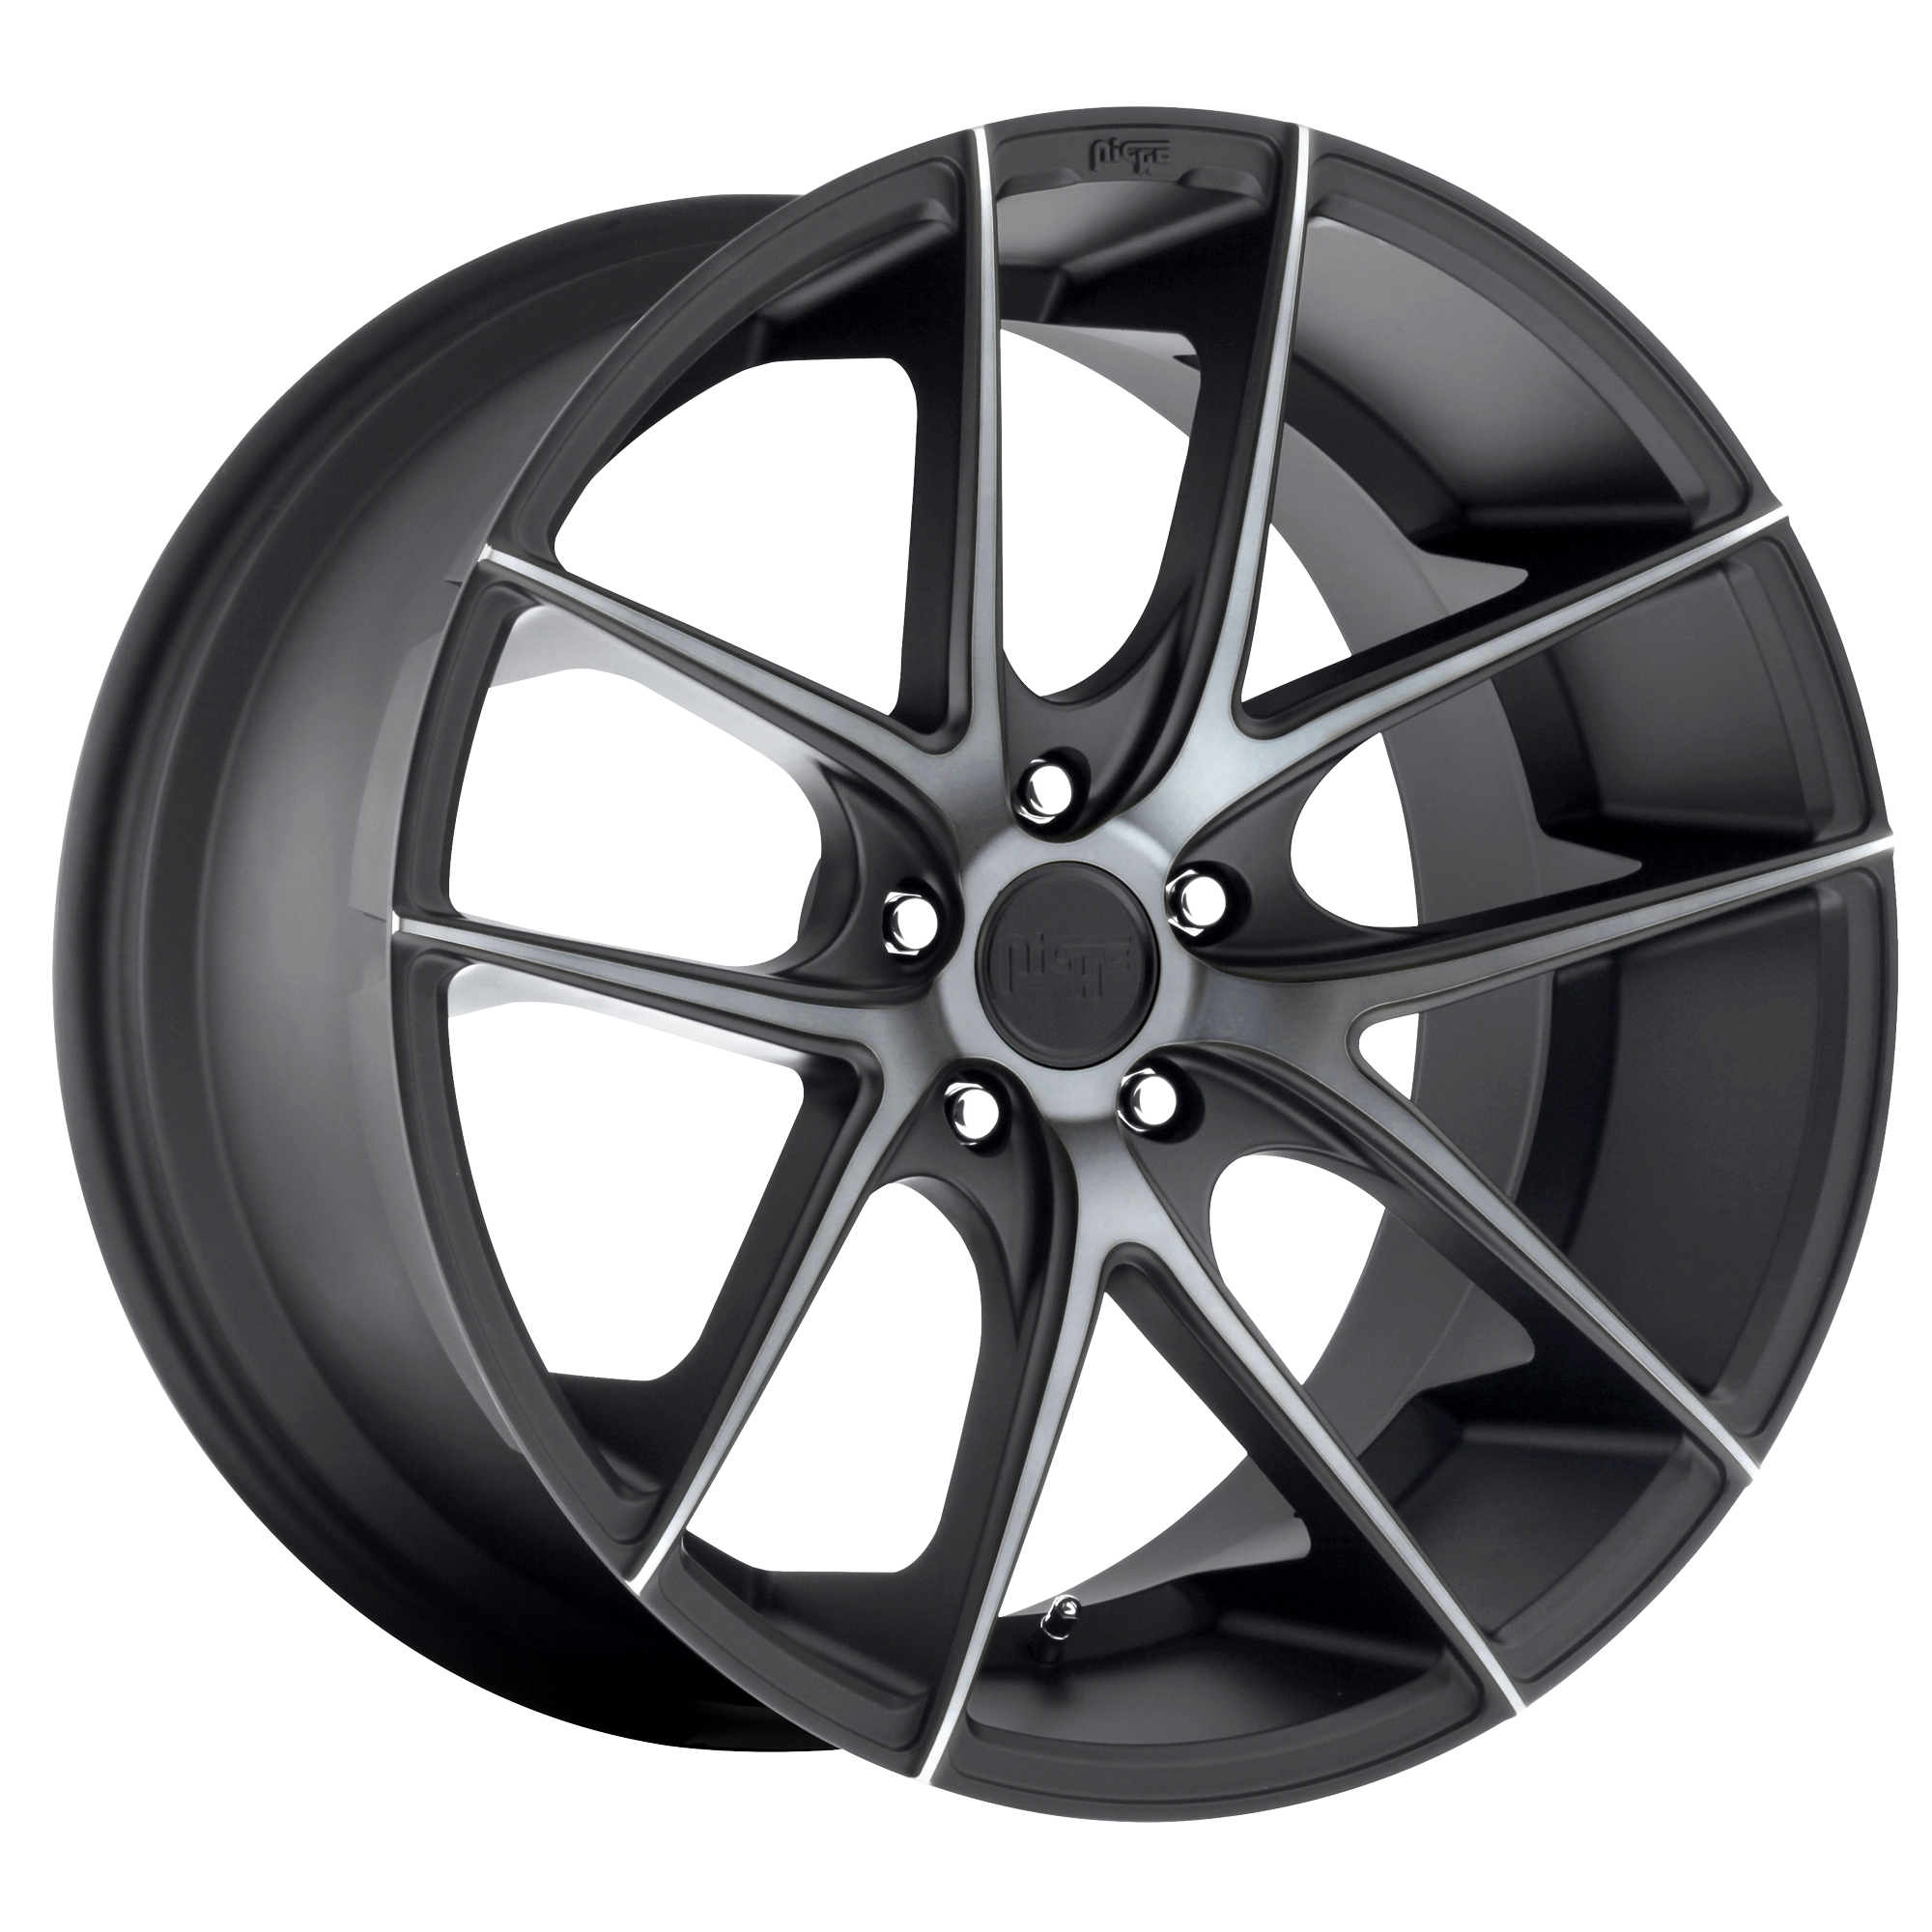 TARGA 18x9.5 5x120.00 MATTE BLACK DOUBLE DARK TINT (40 mm) - Tires and Engine Performance